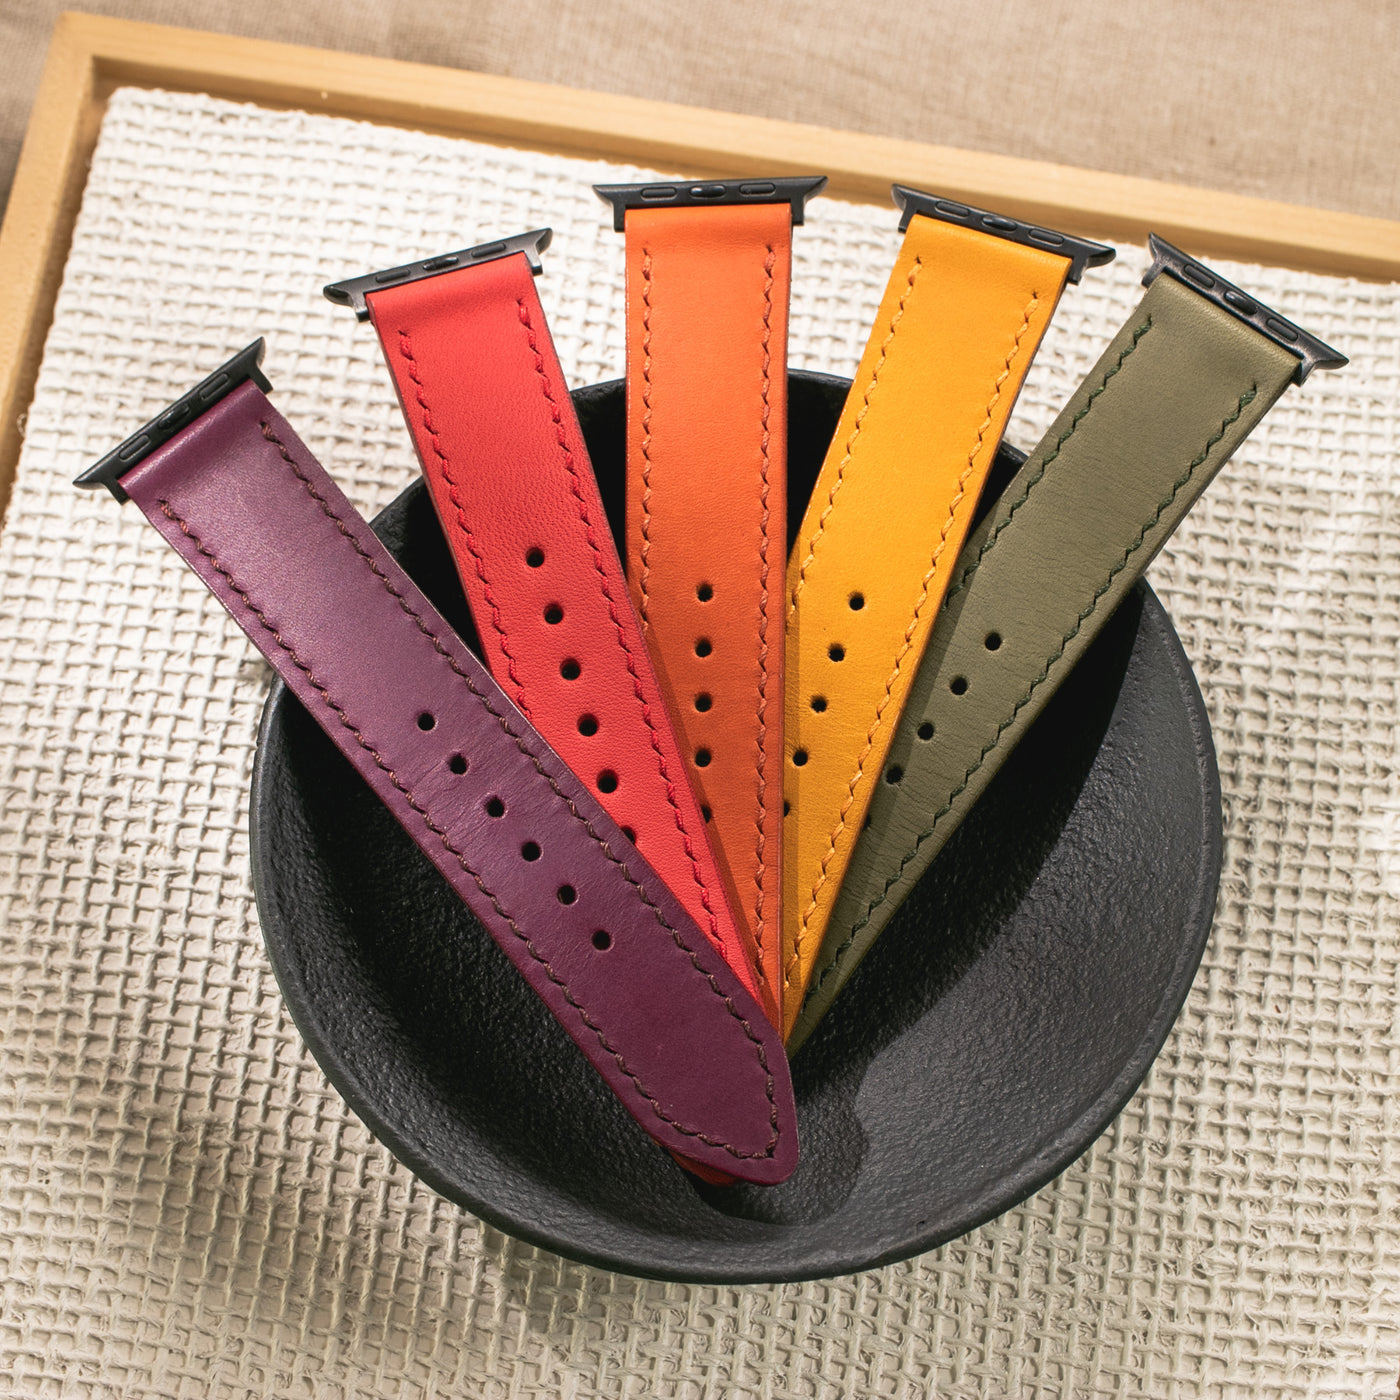 Custom Made VegTan Leather Watch Strap - Orange